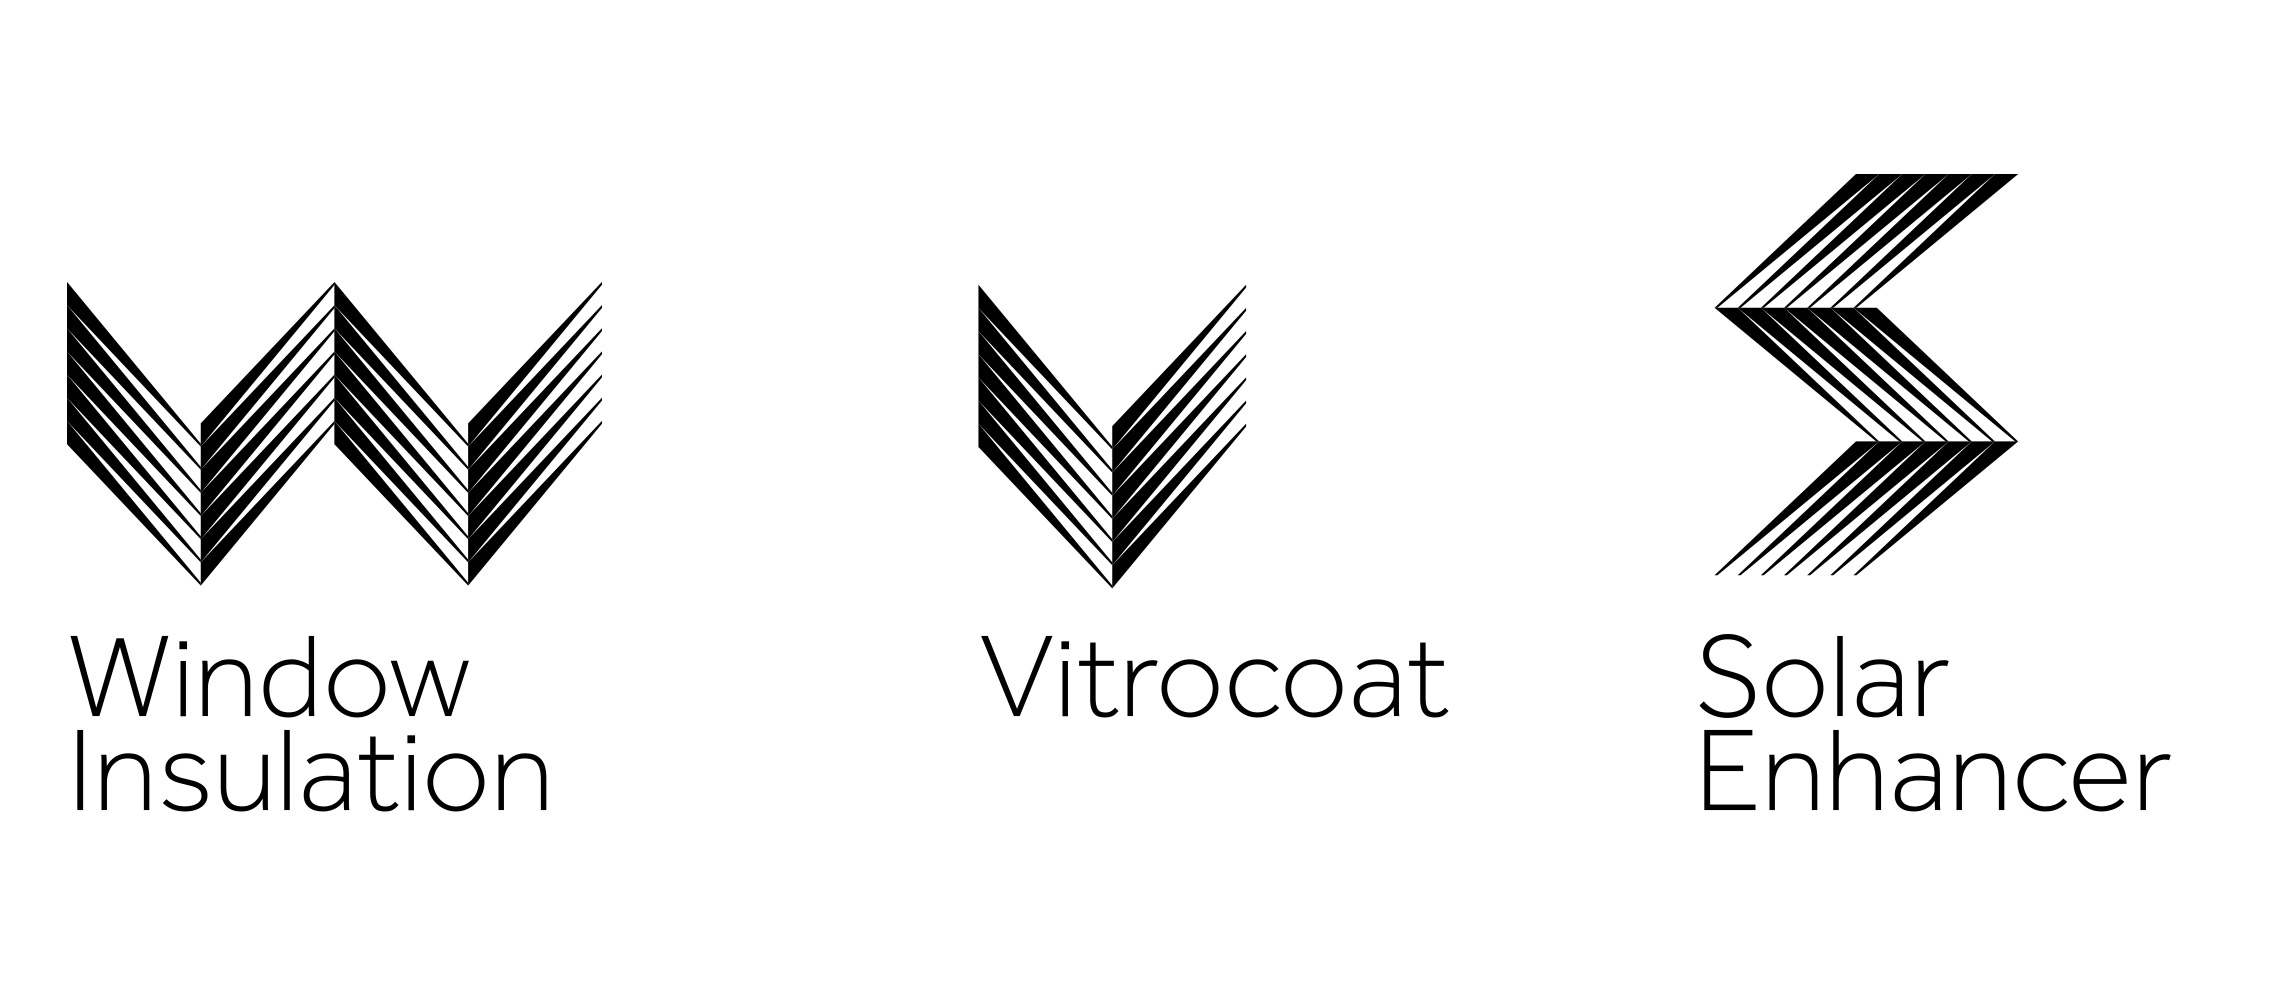 Window Insulation logo and sub-brands diagonal lines sub brands vitrocoat solar enhancer